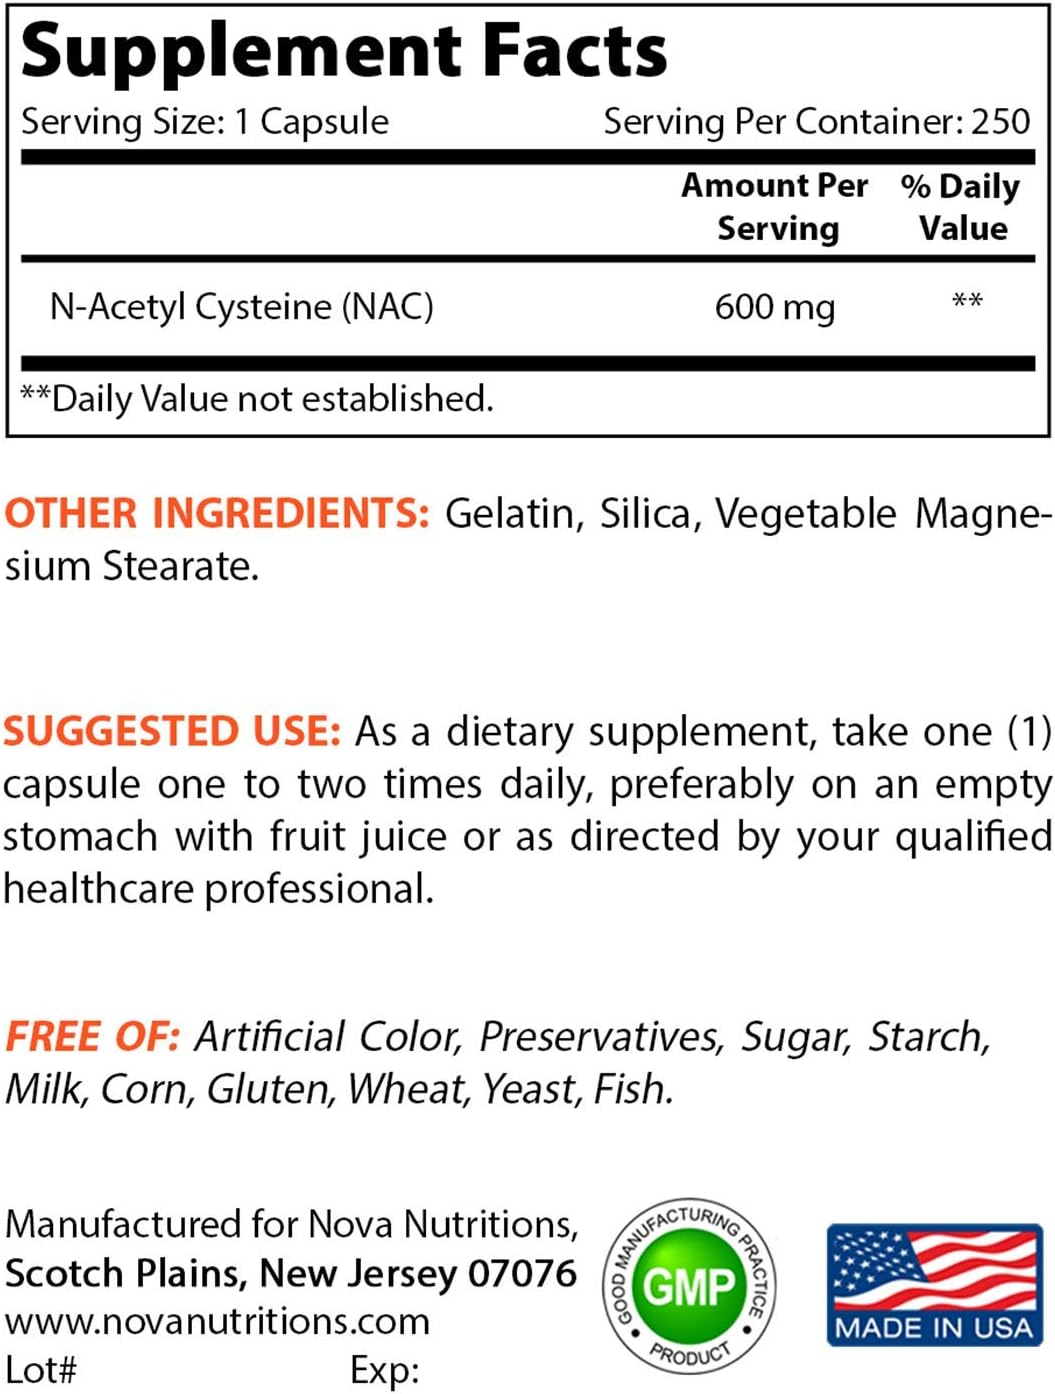 Nova Nutritions N-Acetyl L-Cysteine NAC 600Mg. 250 Capsulas